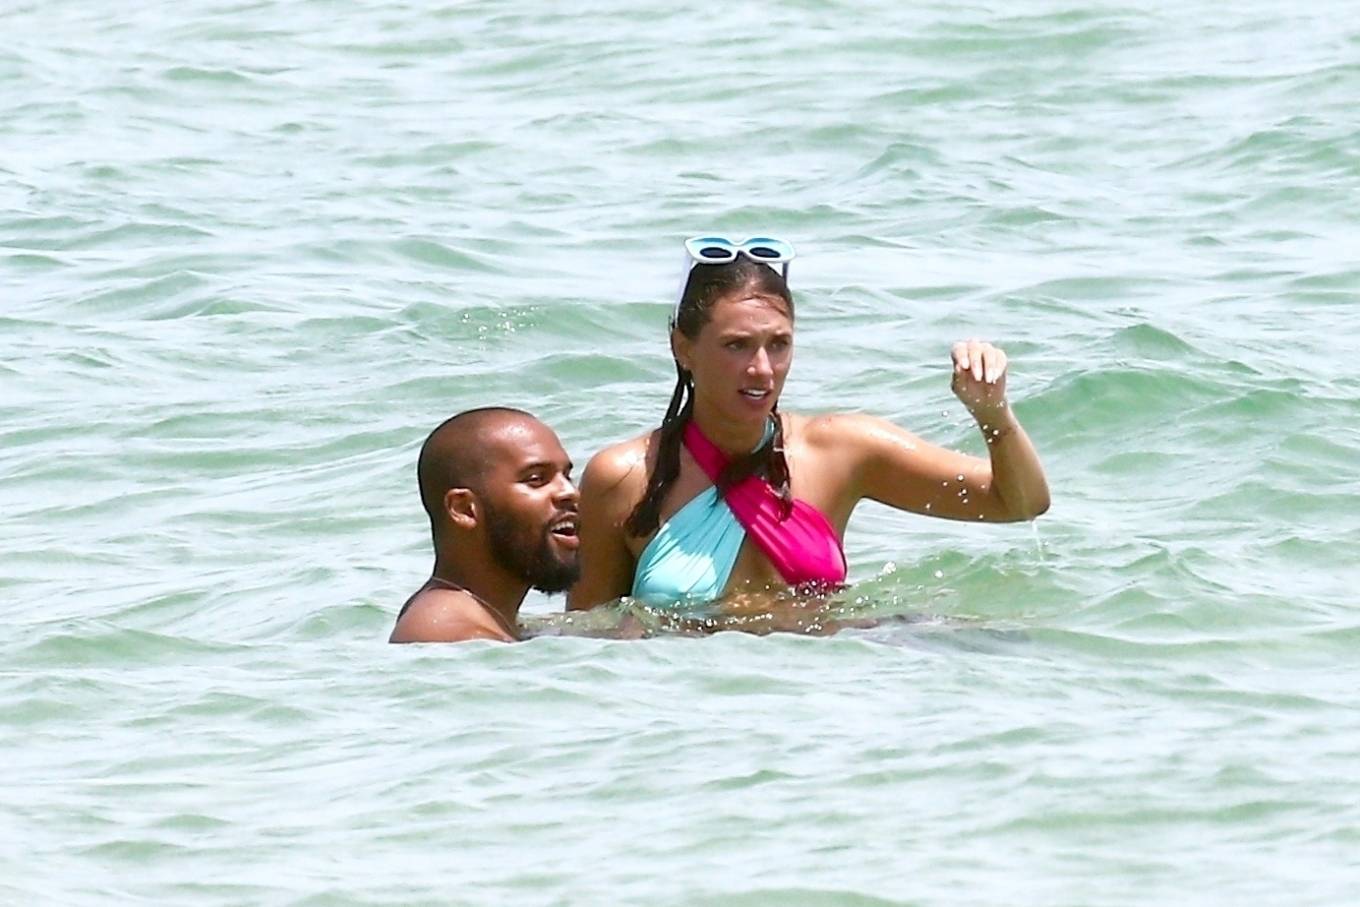 YesJulz AKA Julieanna Goddard – In a multi-colored bikini on the beach in Miami